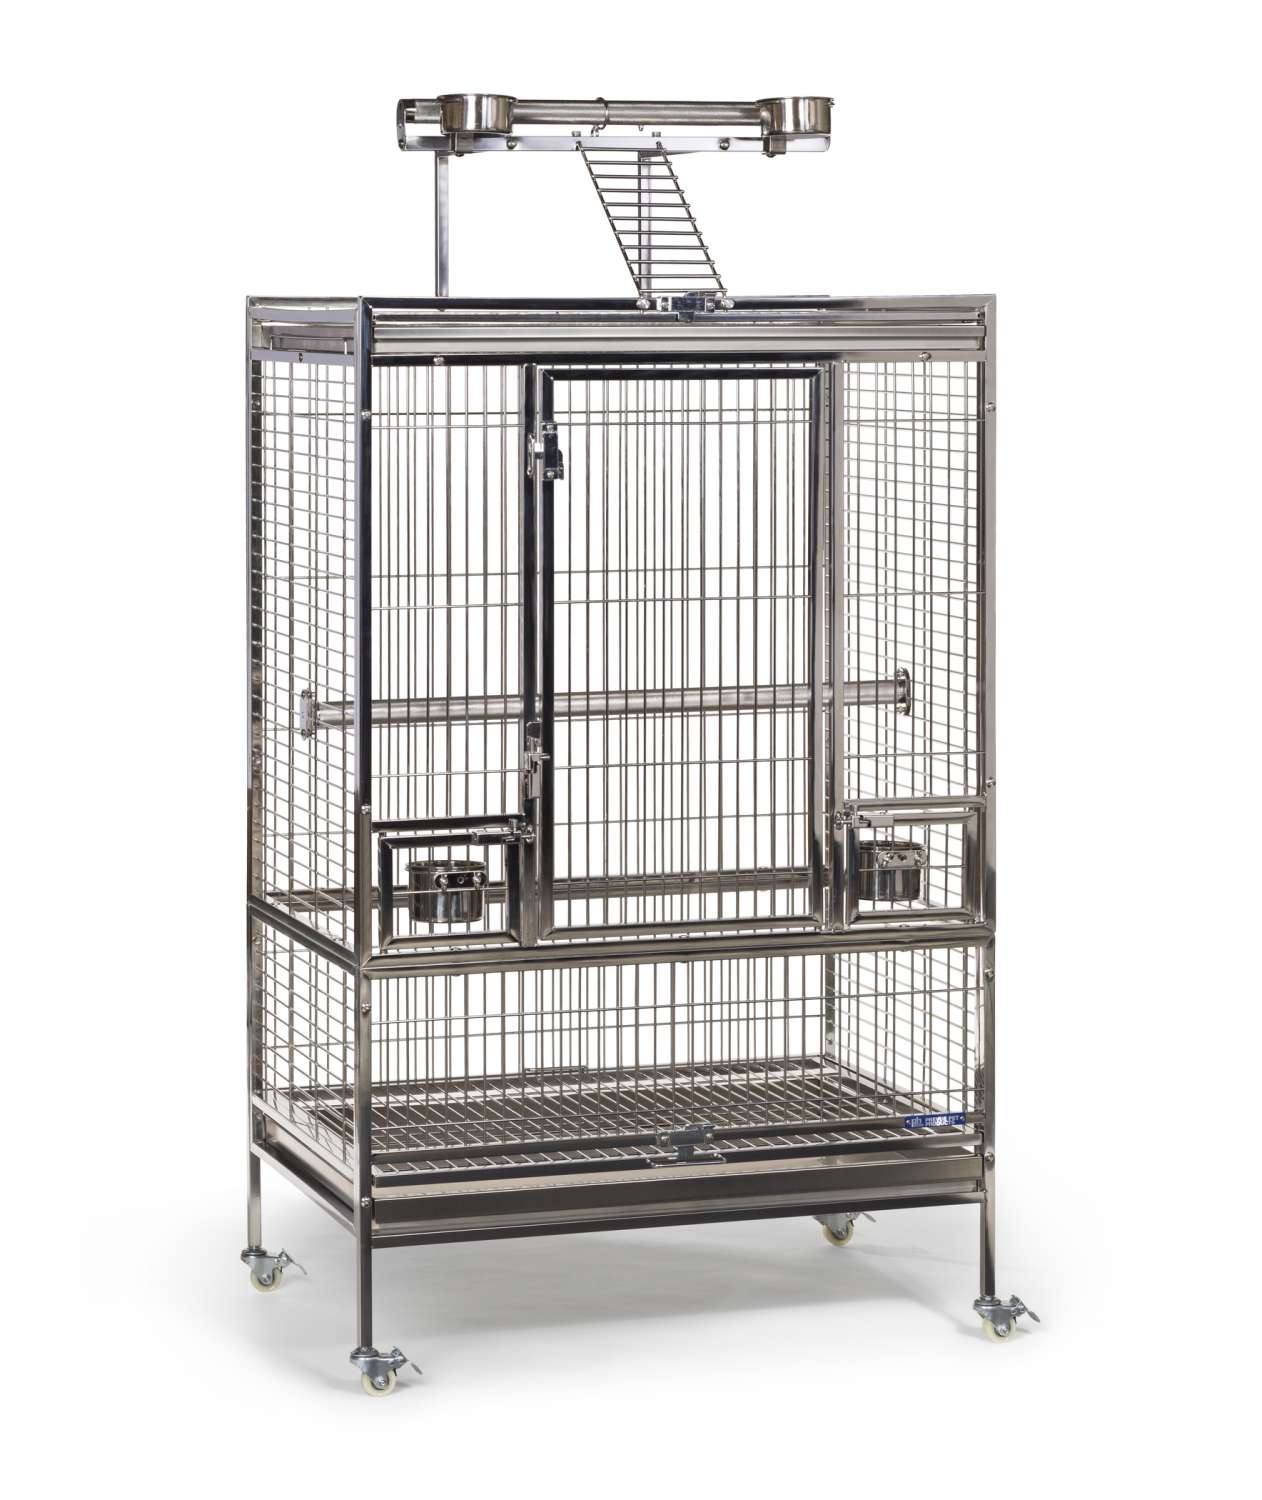  Prevue Pet Products Tubular Steel Hanging Bird Cage Stand 1781  White, 24-Inch by 24-Inch by 60-Inch : Bird Cage With Stand : Pet Supplies